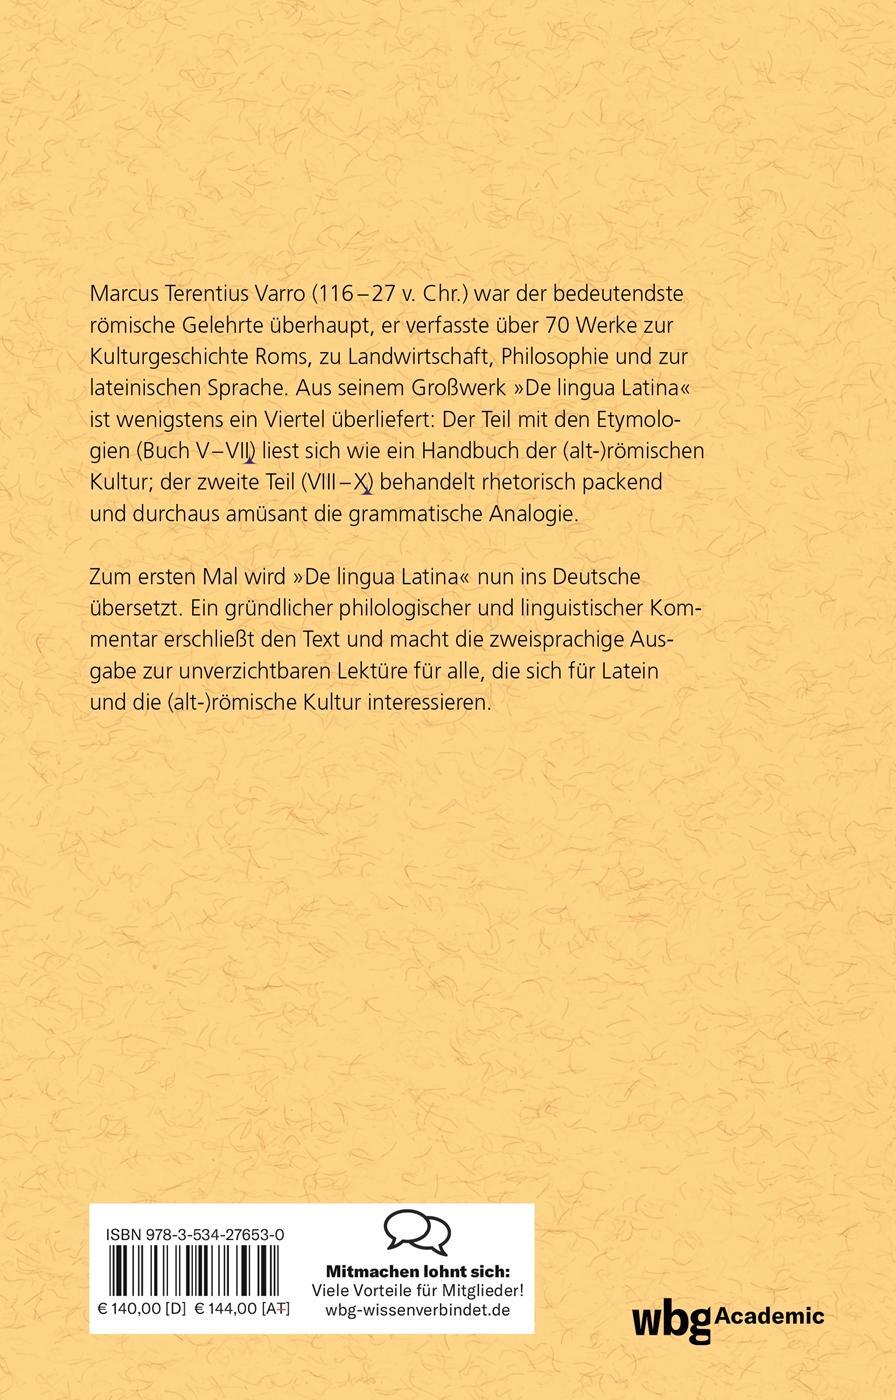 Rückseite: 9783534276530 | Marcus Terentius Varro: De Lingua Latina (2 Bände) | Edition Antike